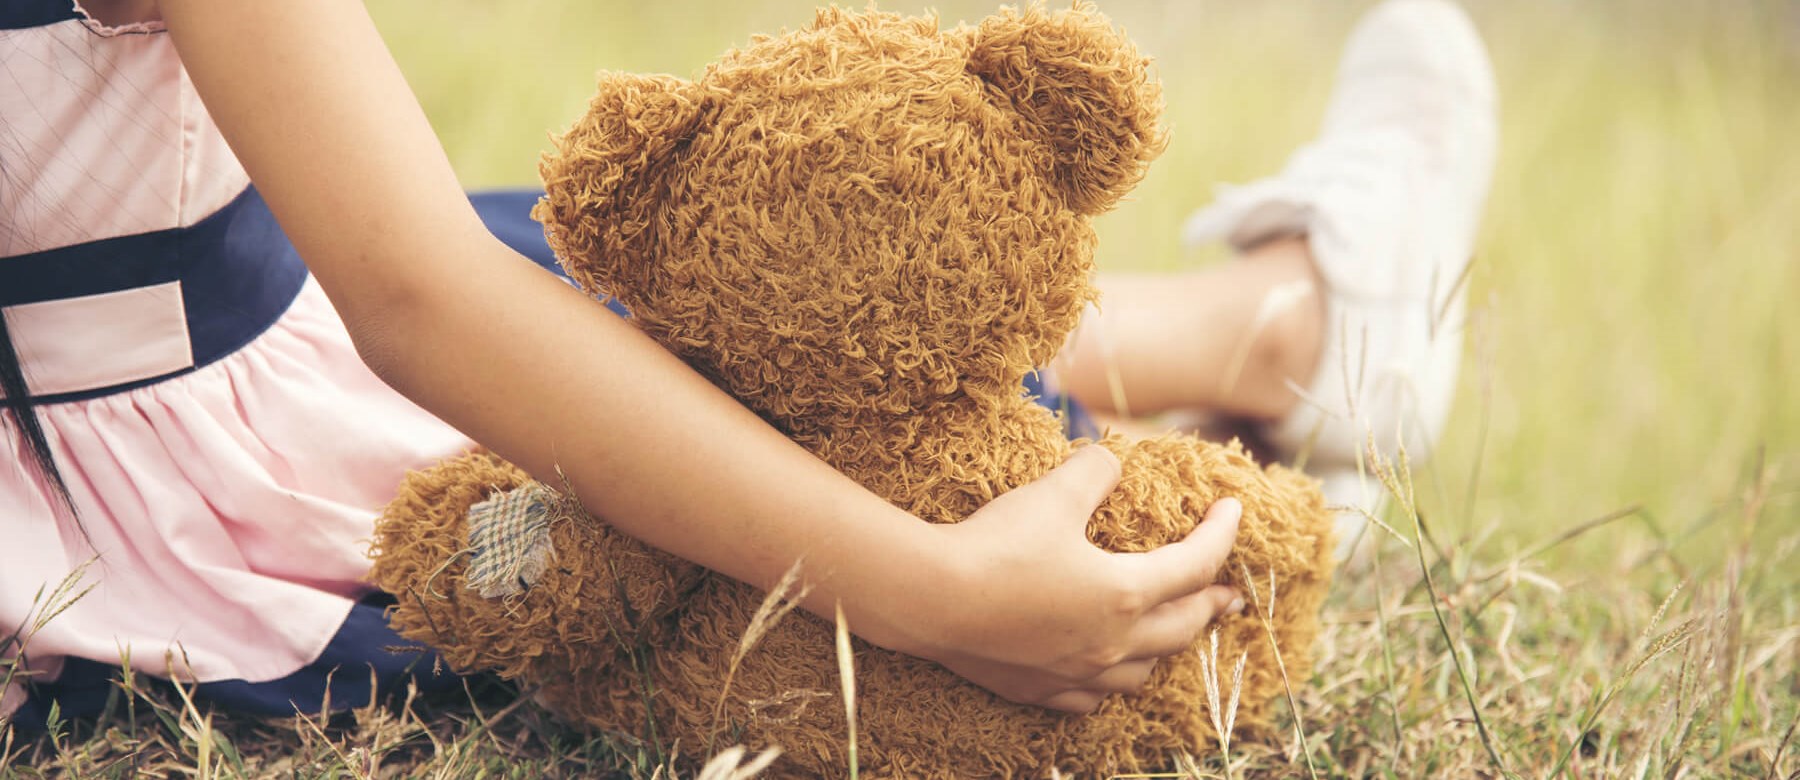 Girl Hugging Teddy on Grass